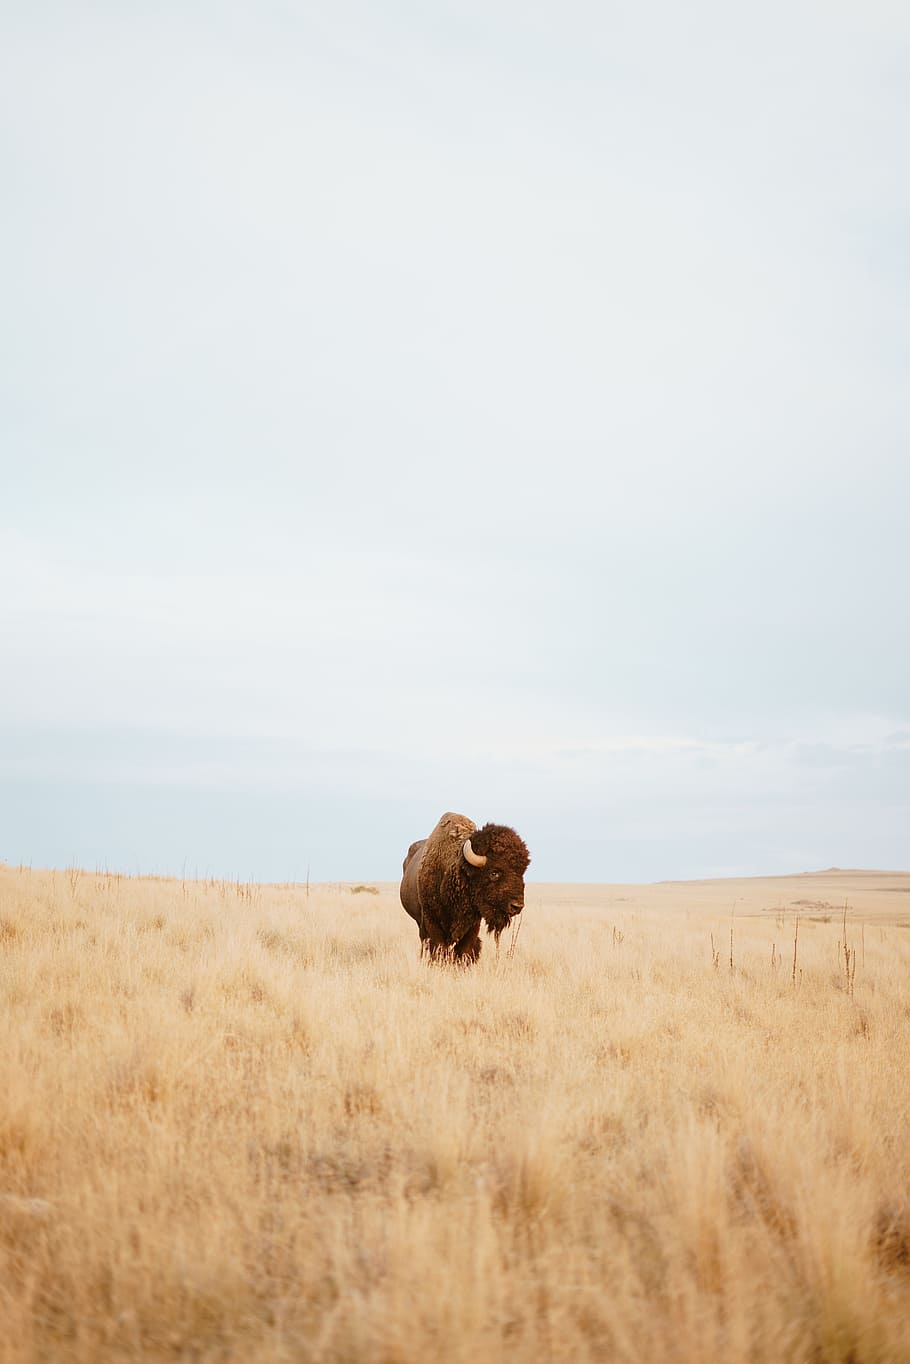 bison standing on brown field during daytime, buffalo, animal